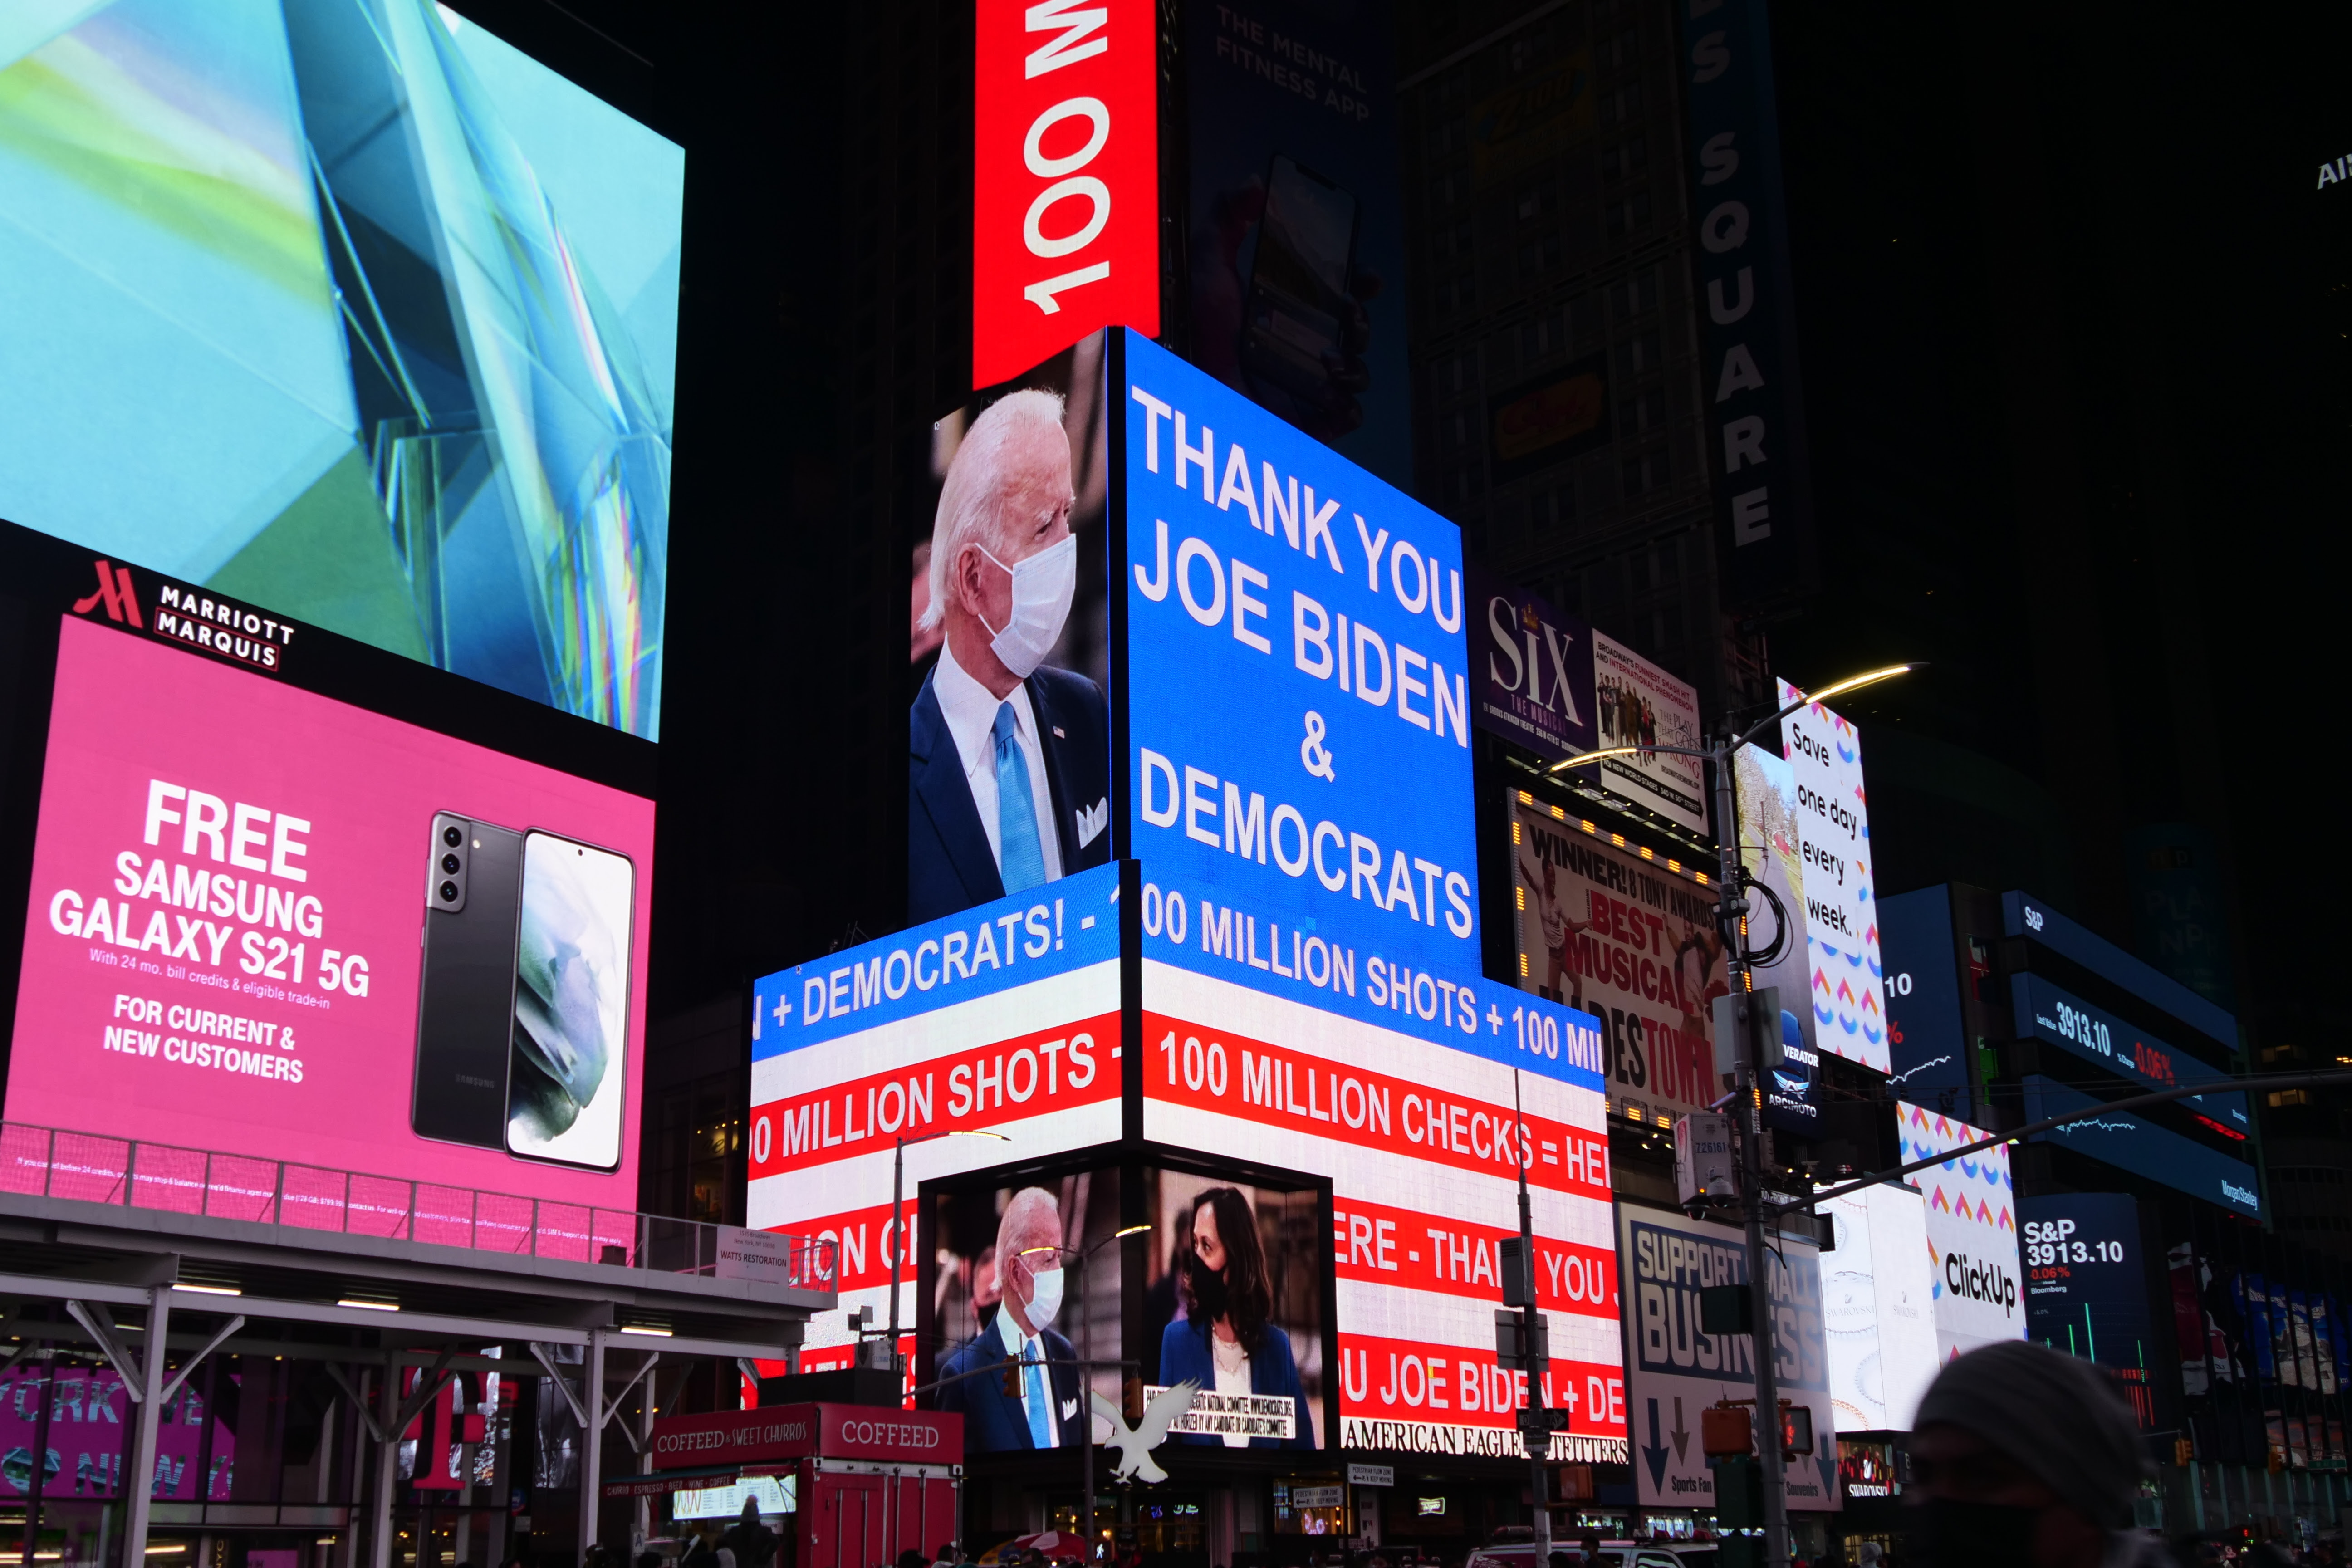 Thank you Joe Biden & Democrats!